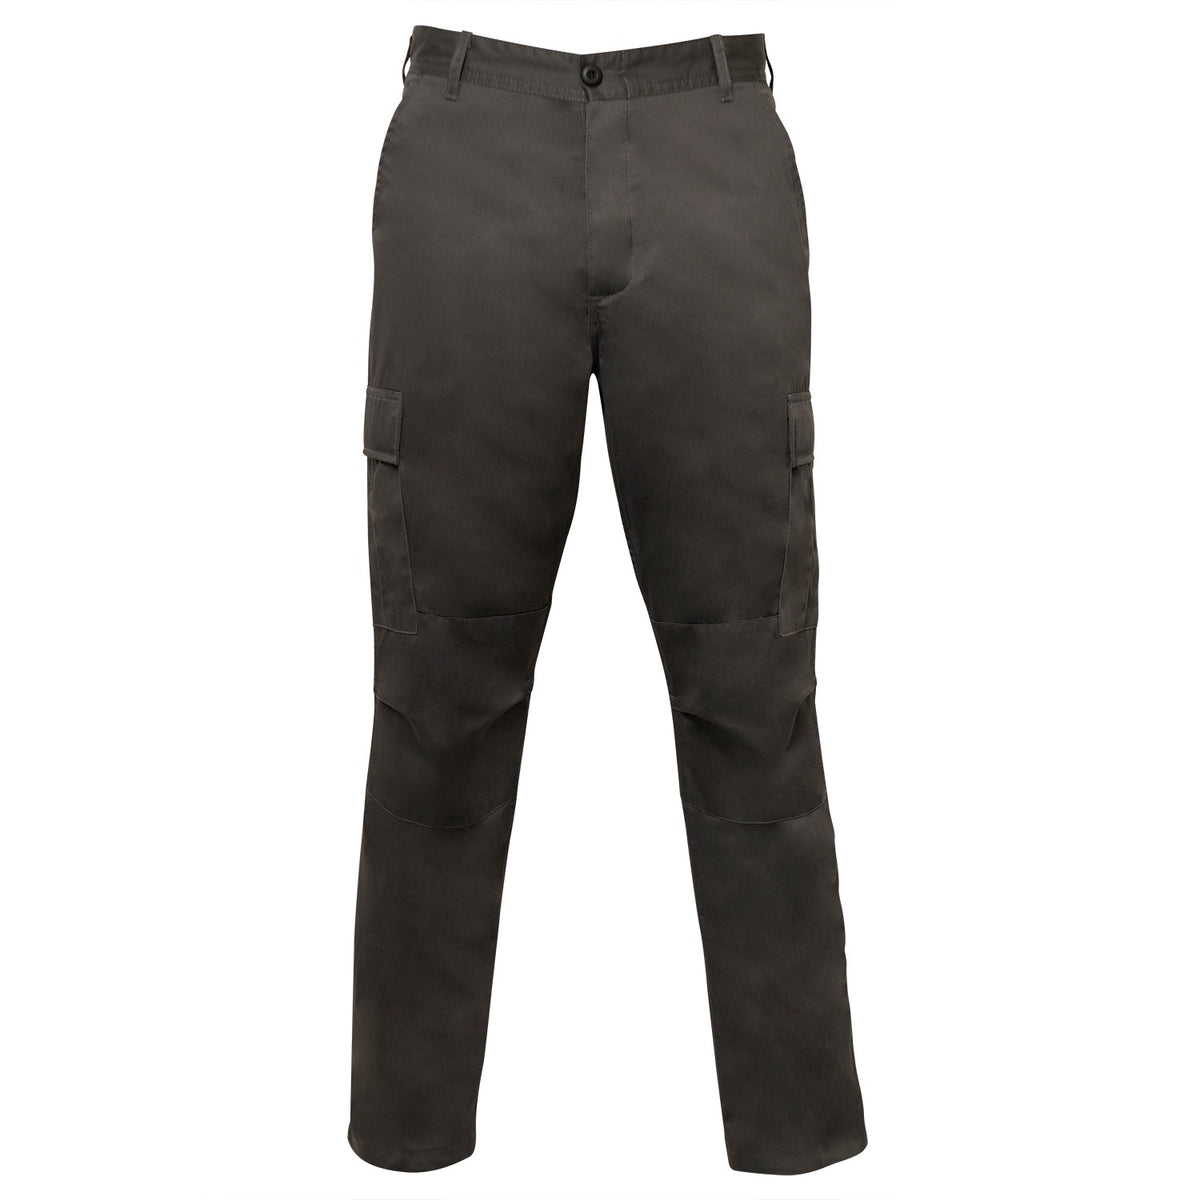 Rothco Charcoal Grey Tactical BDU Pants